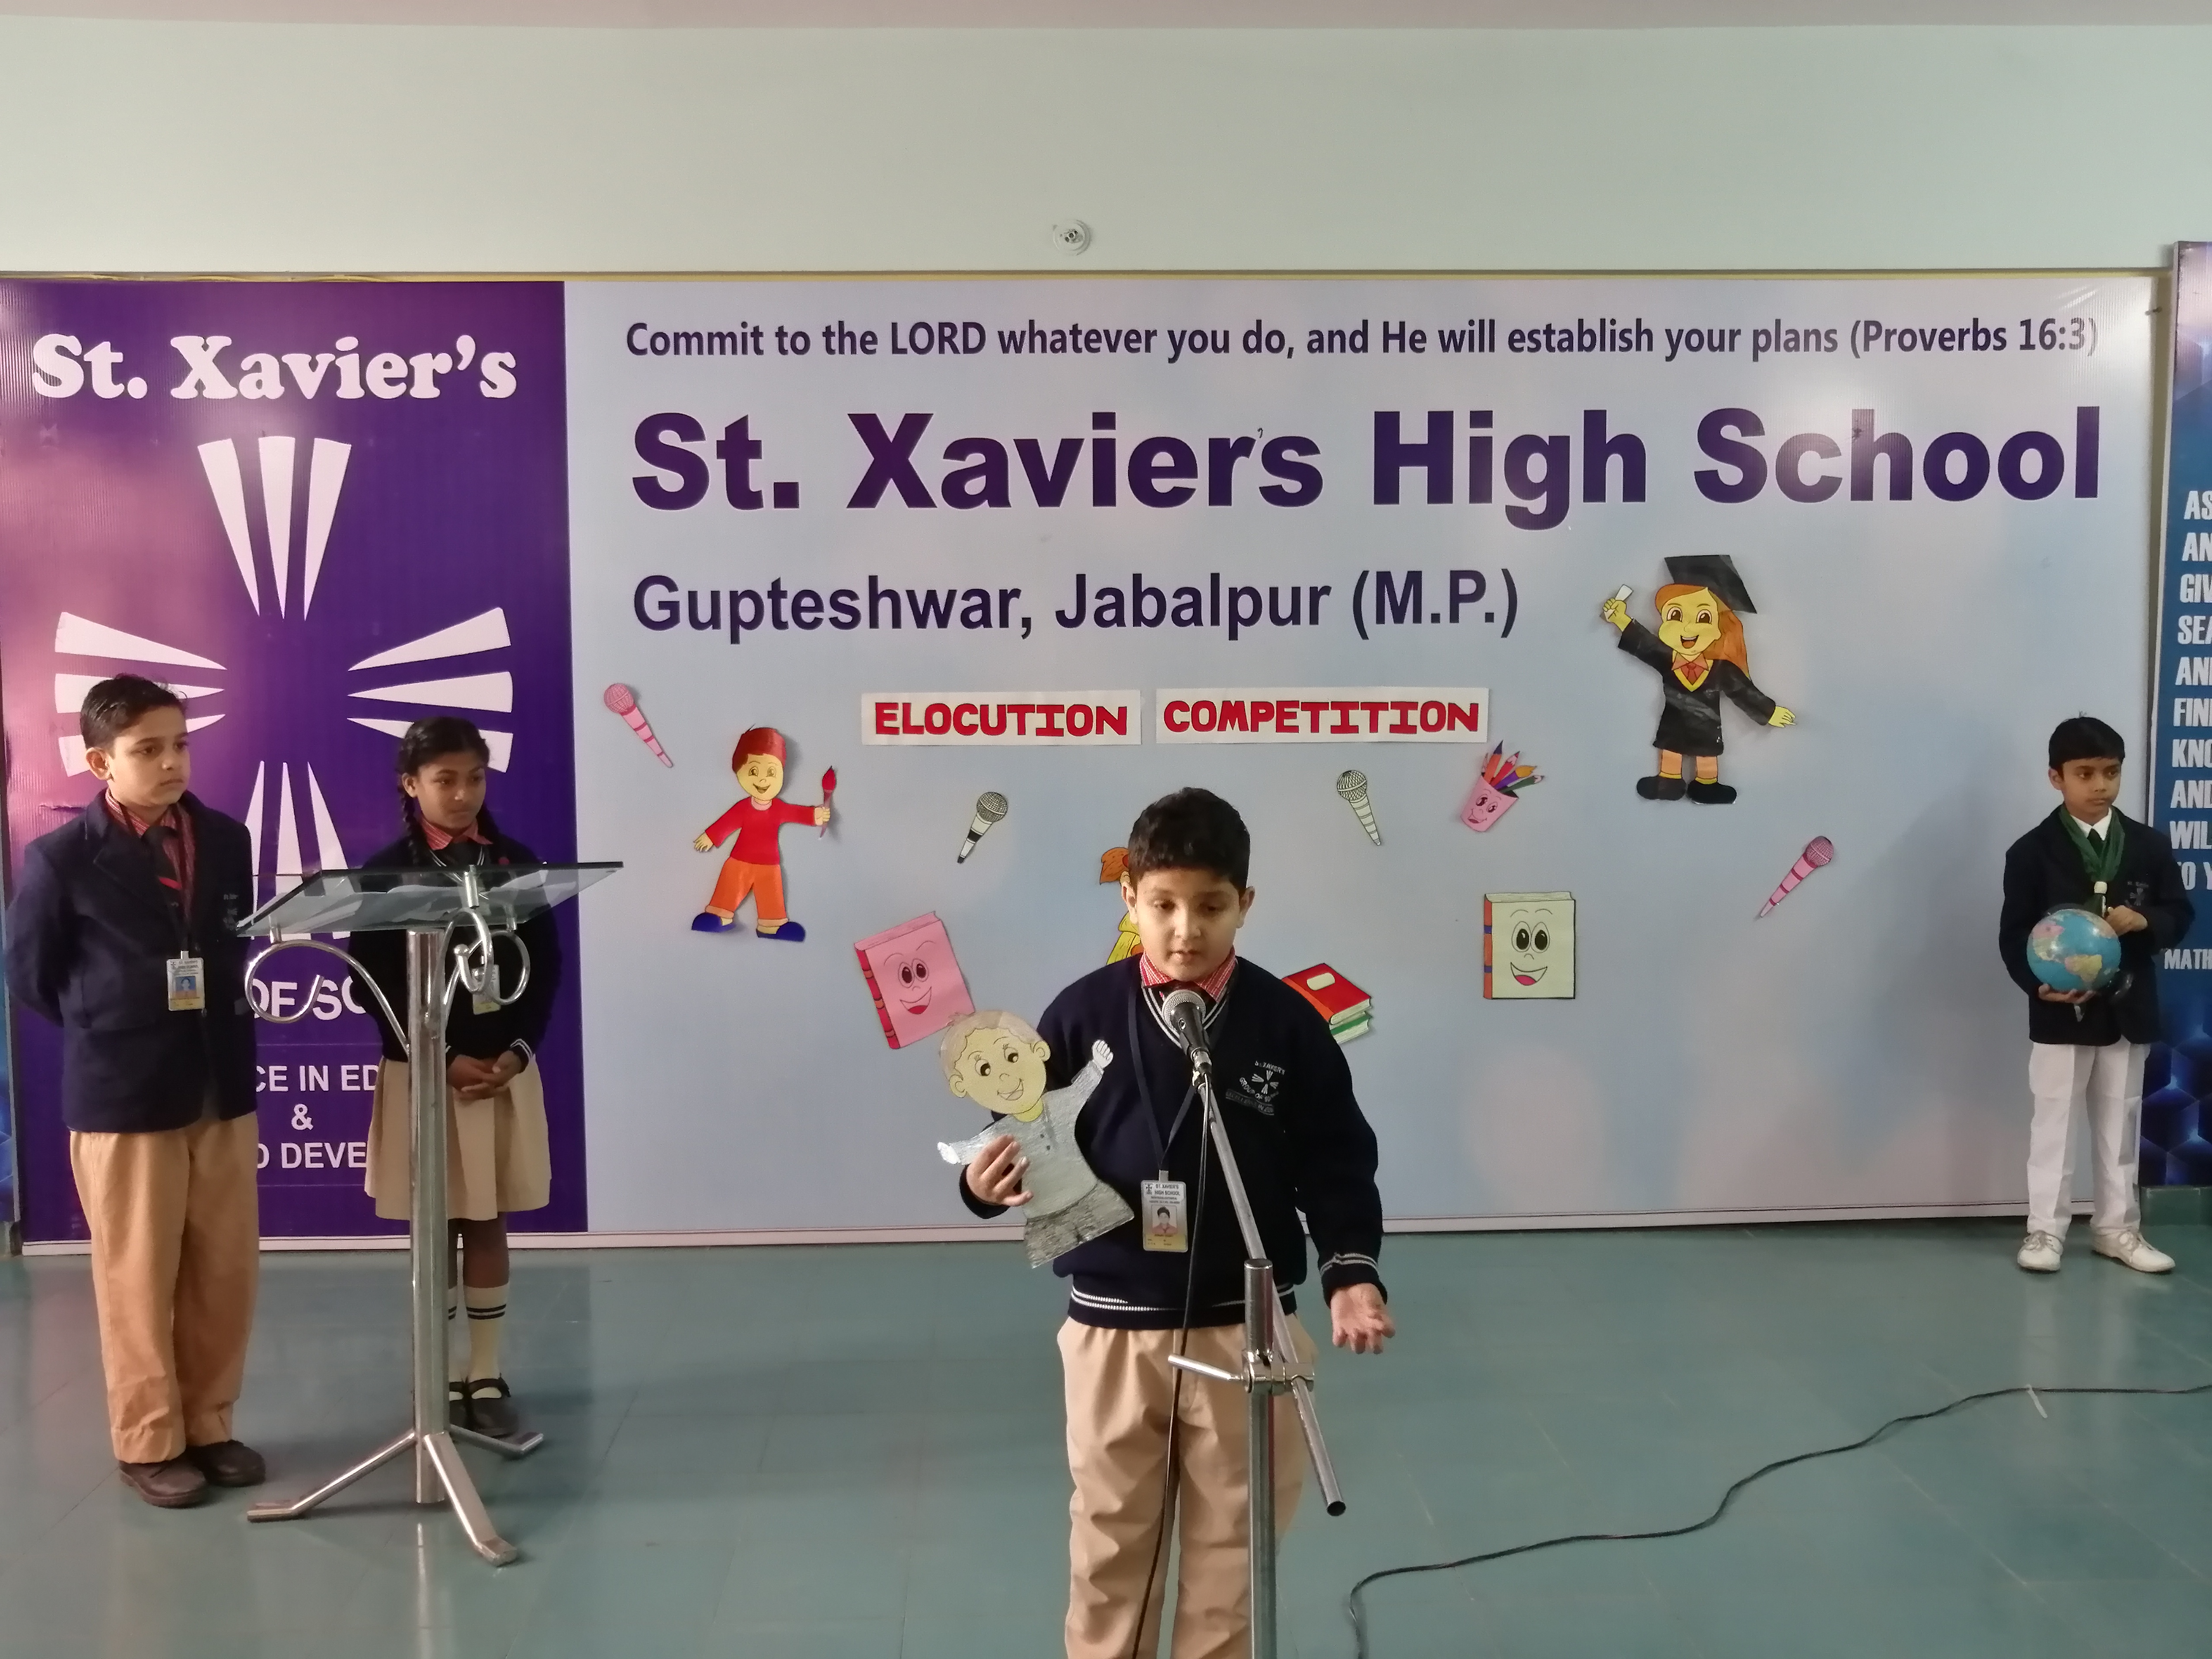 Elocution competition - Ryan Intetrnational School, SXHS Jabalpur